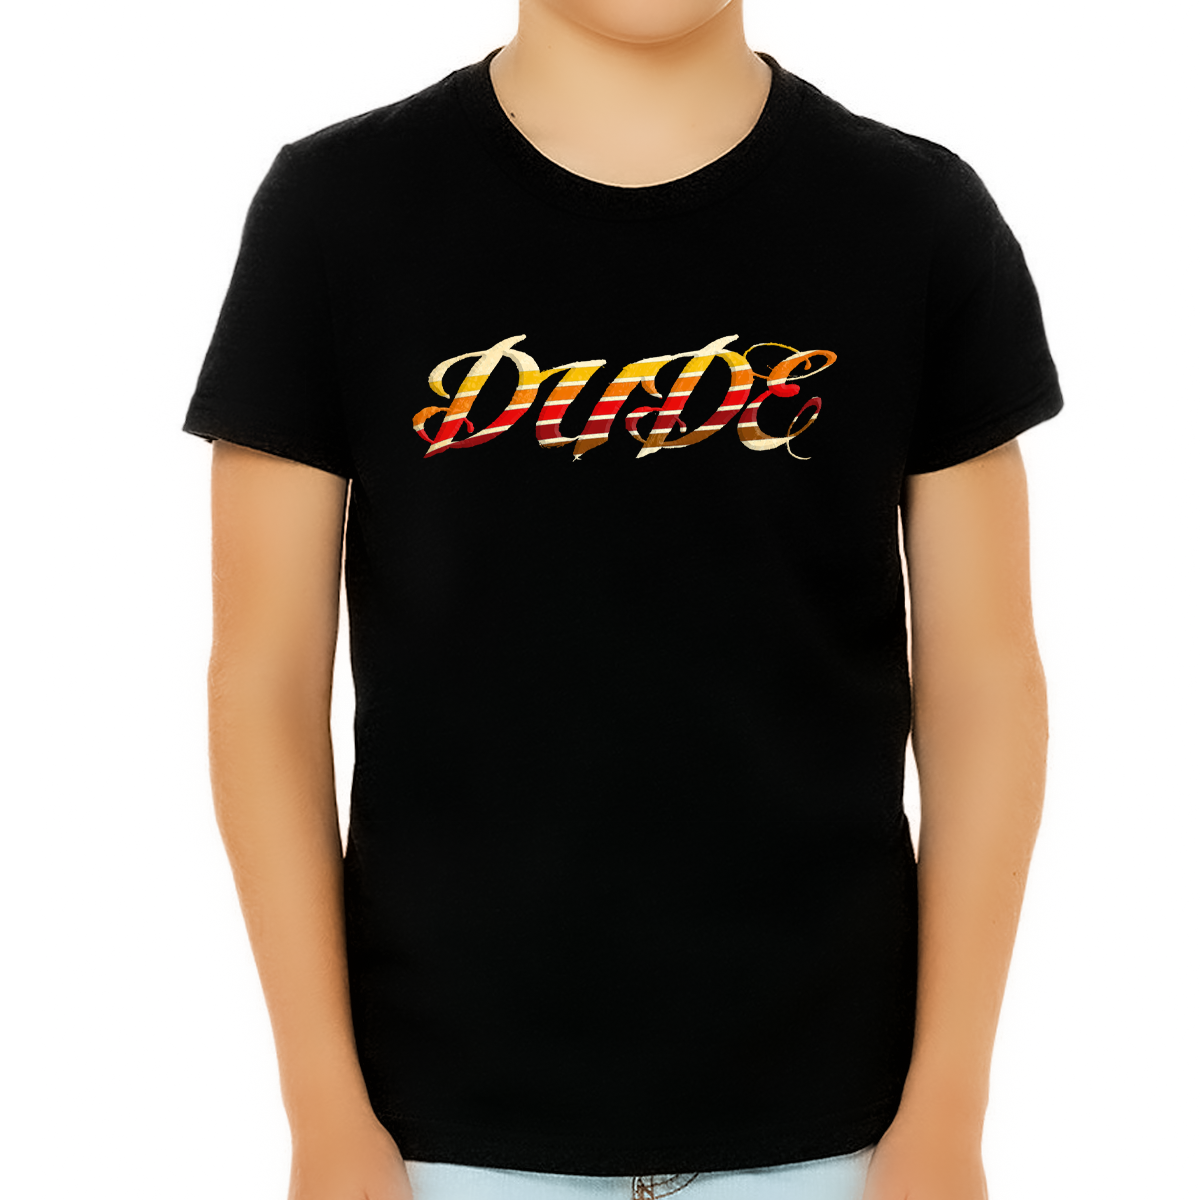 Perfect Dude Merchandise - Perfect Dude Shirt for BOYS YOUTH KIDS - Vintage Retro Graphic Tees - Big Lebowski Shirt